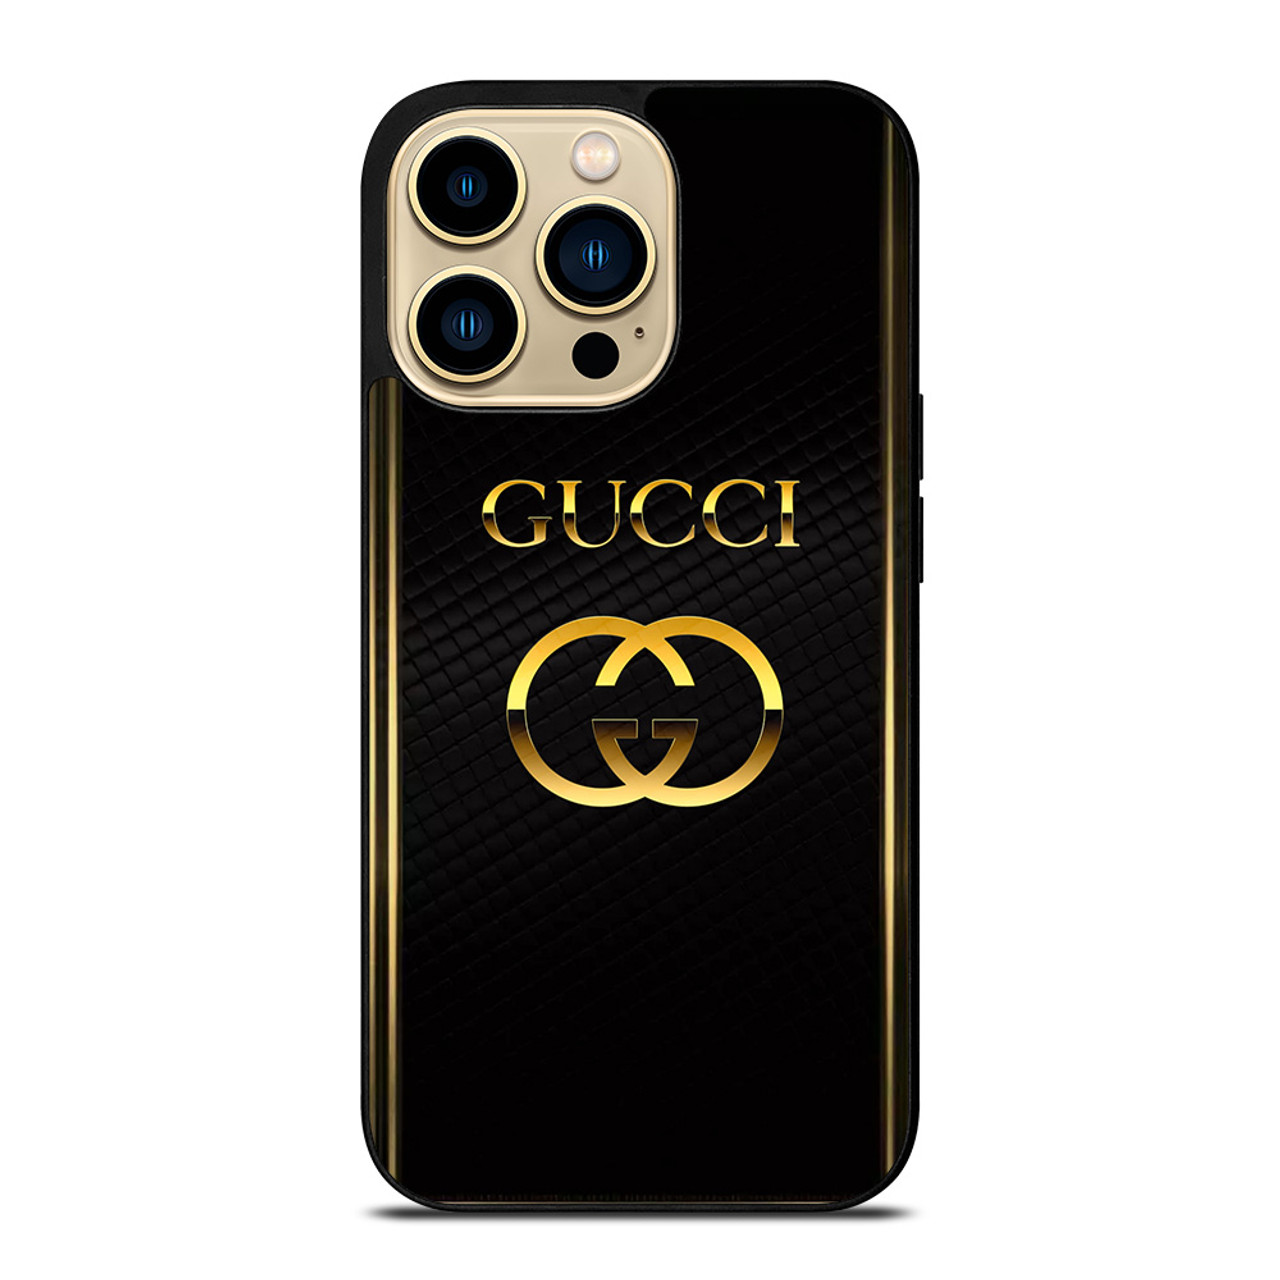 GUCCI LOGO BLACK GOLD iPhone 14 Pro Max Case Cover